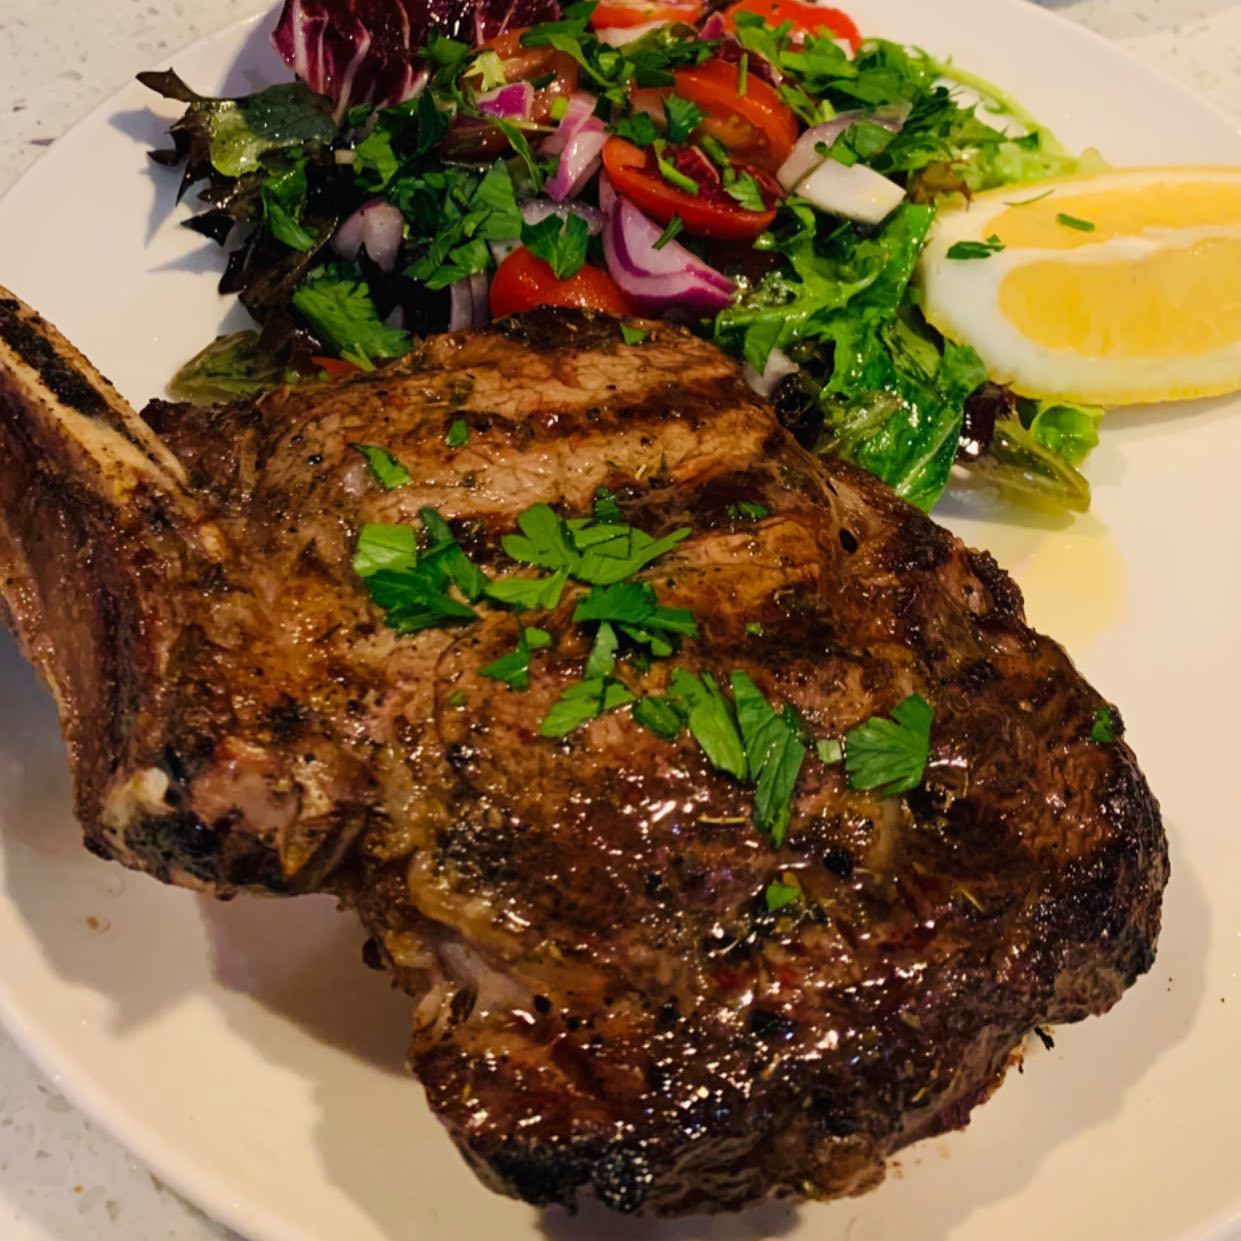 Rib Eye Steak & Fresh Salad 🥩 🥗 
.
.
.
.
.
#KentroOakleigh #oakleigh #ribeye #ribeyesteak #steak #steakdinner #steaklover #steakporn #steakhouse #food #foodporn #foodie #foodblogger #foodphotography #foodpics